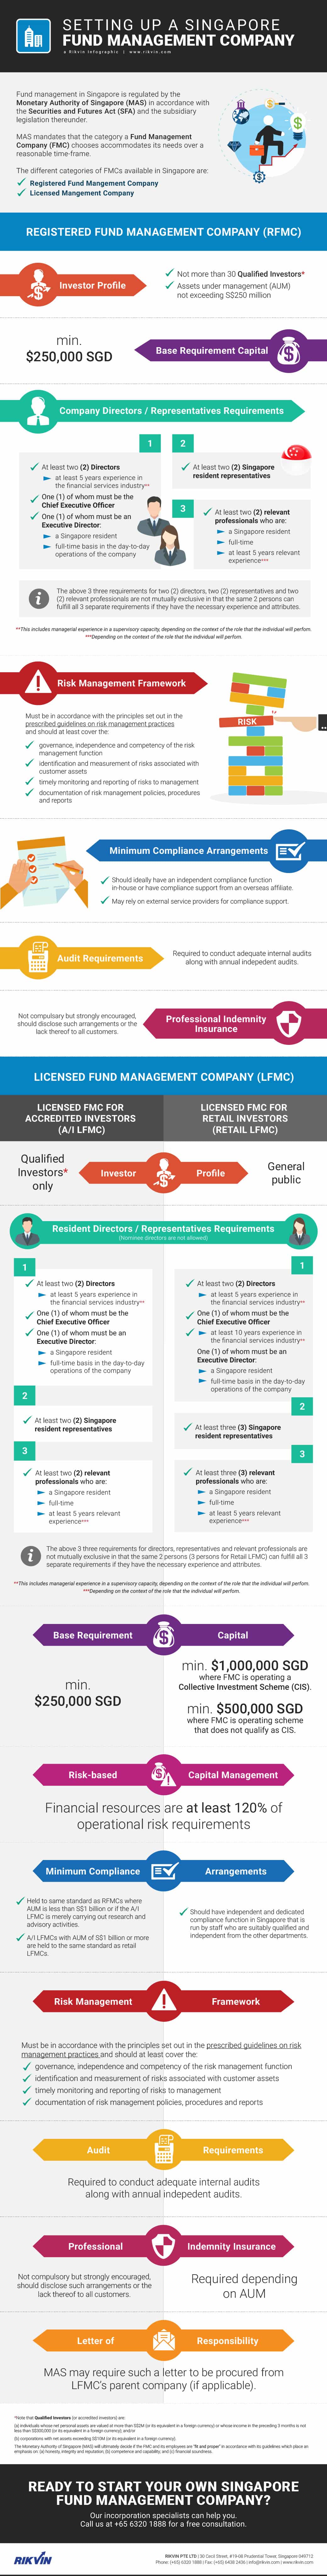 How to Setup a Singapore Fund Management Company Rikvin Infographic